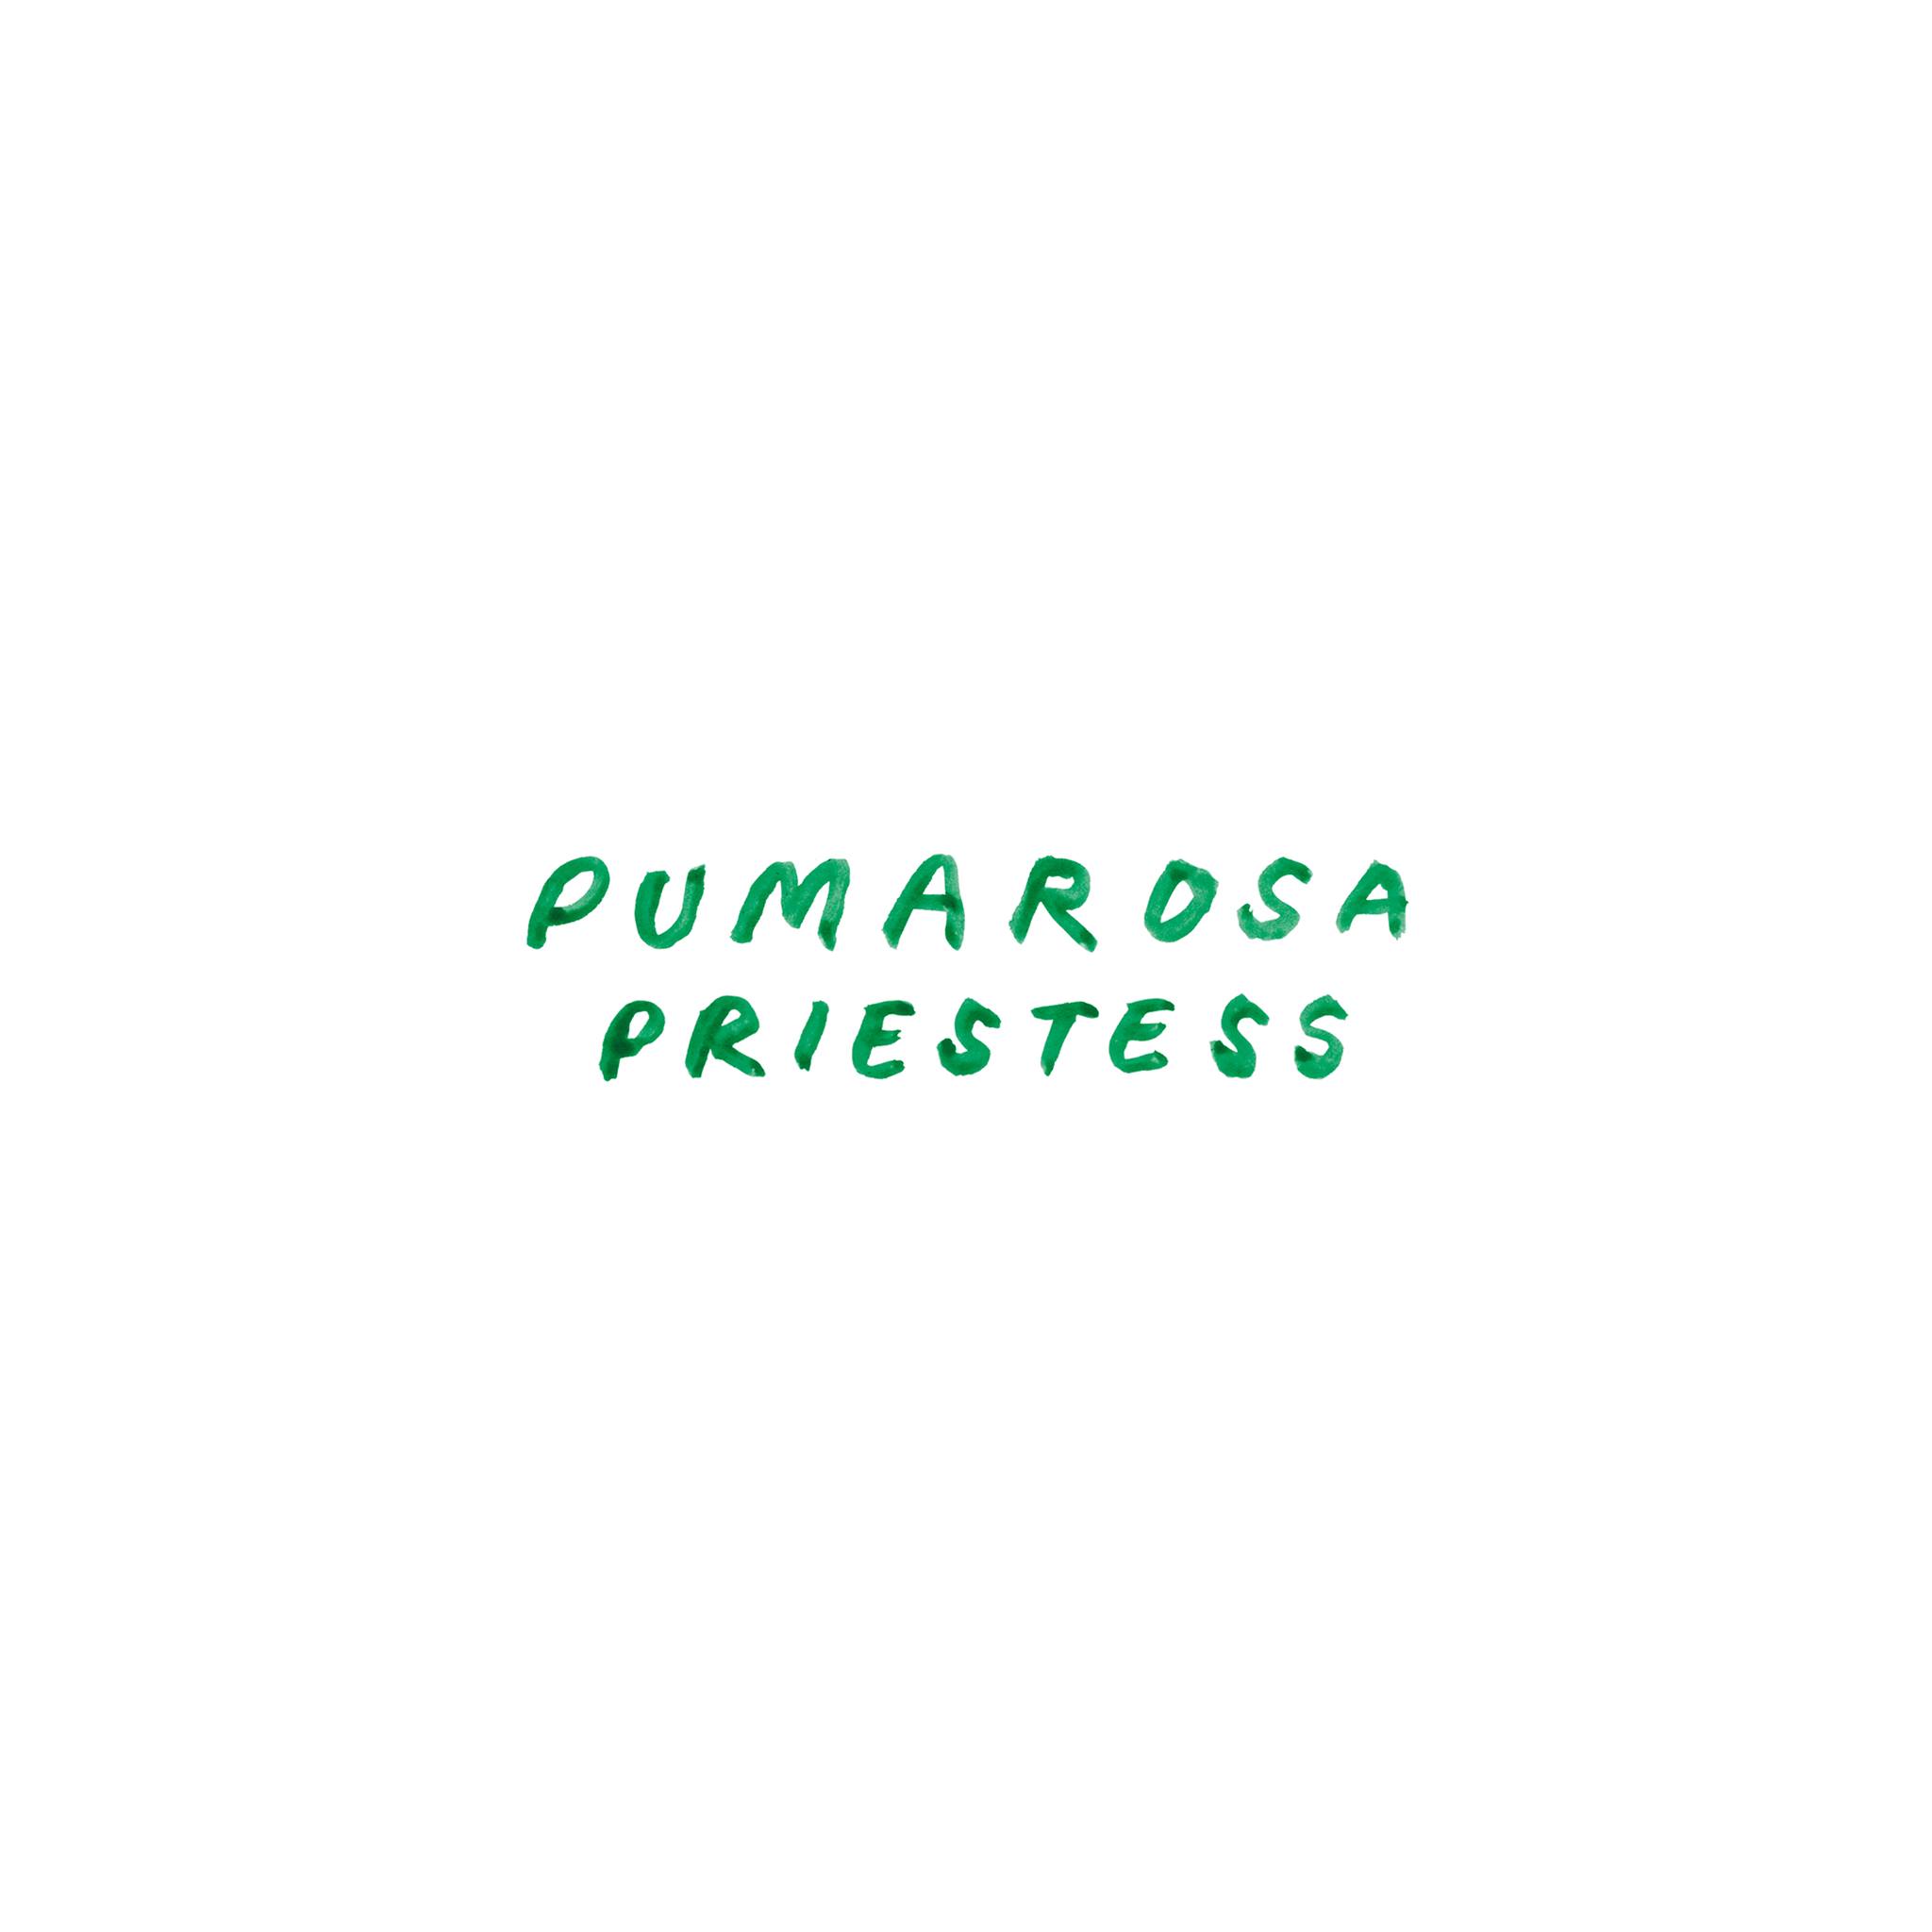 New: Pumarosa – Priestess